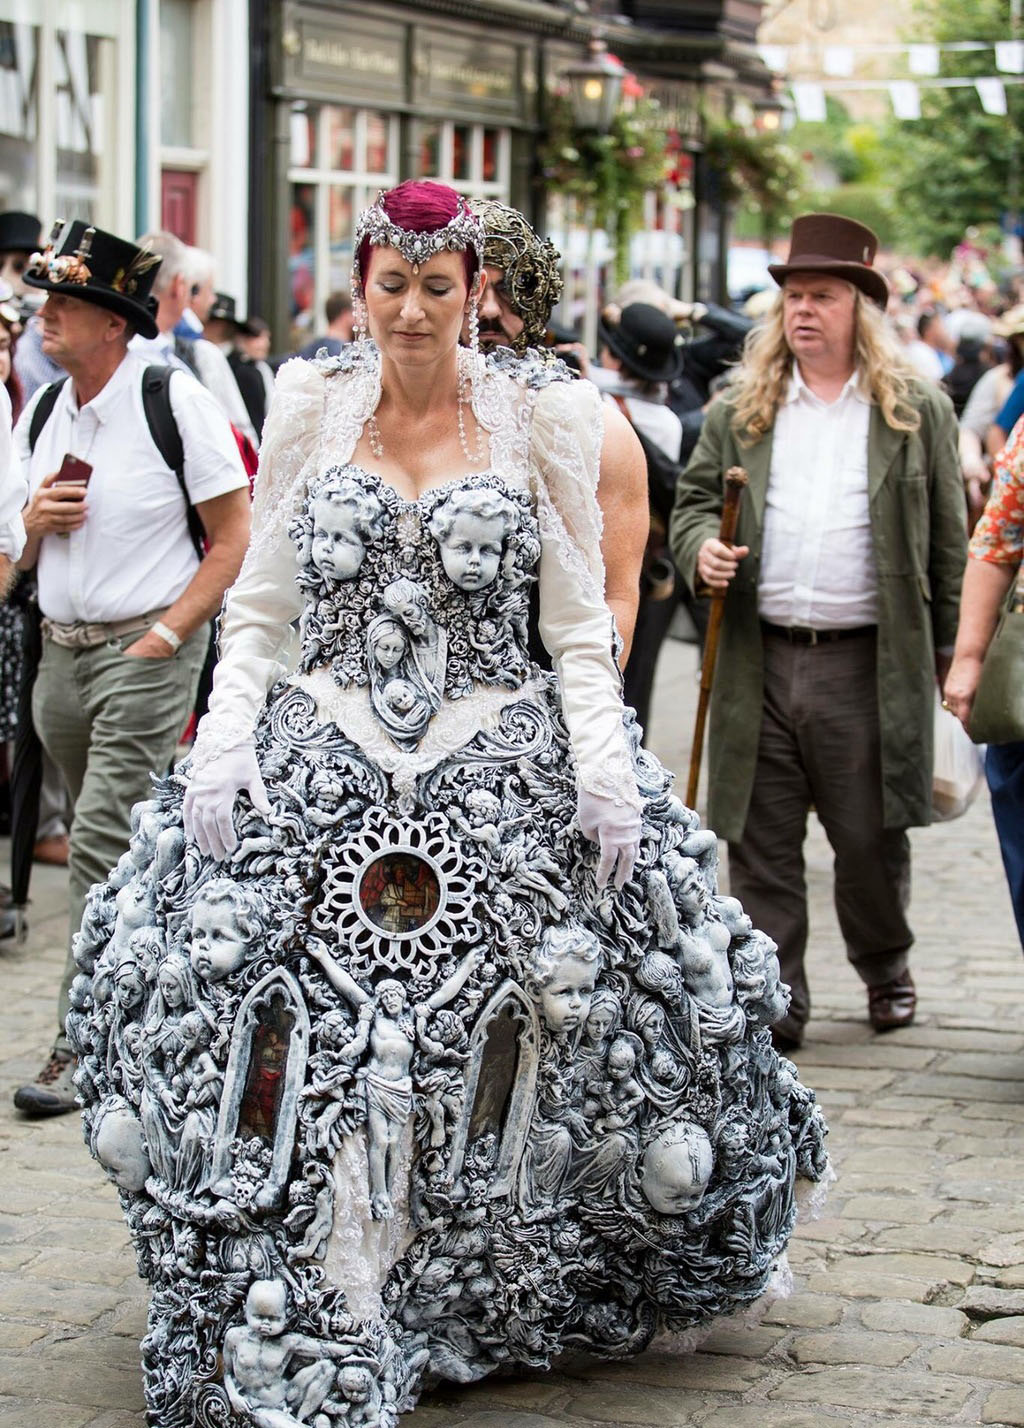 Woman’s dress at steampunk festival.